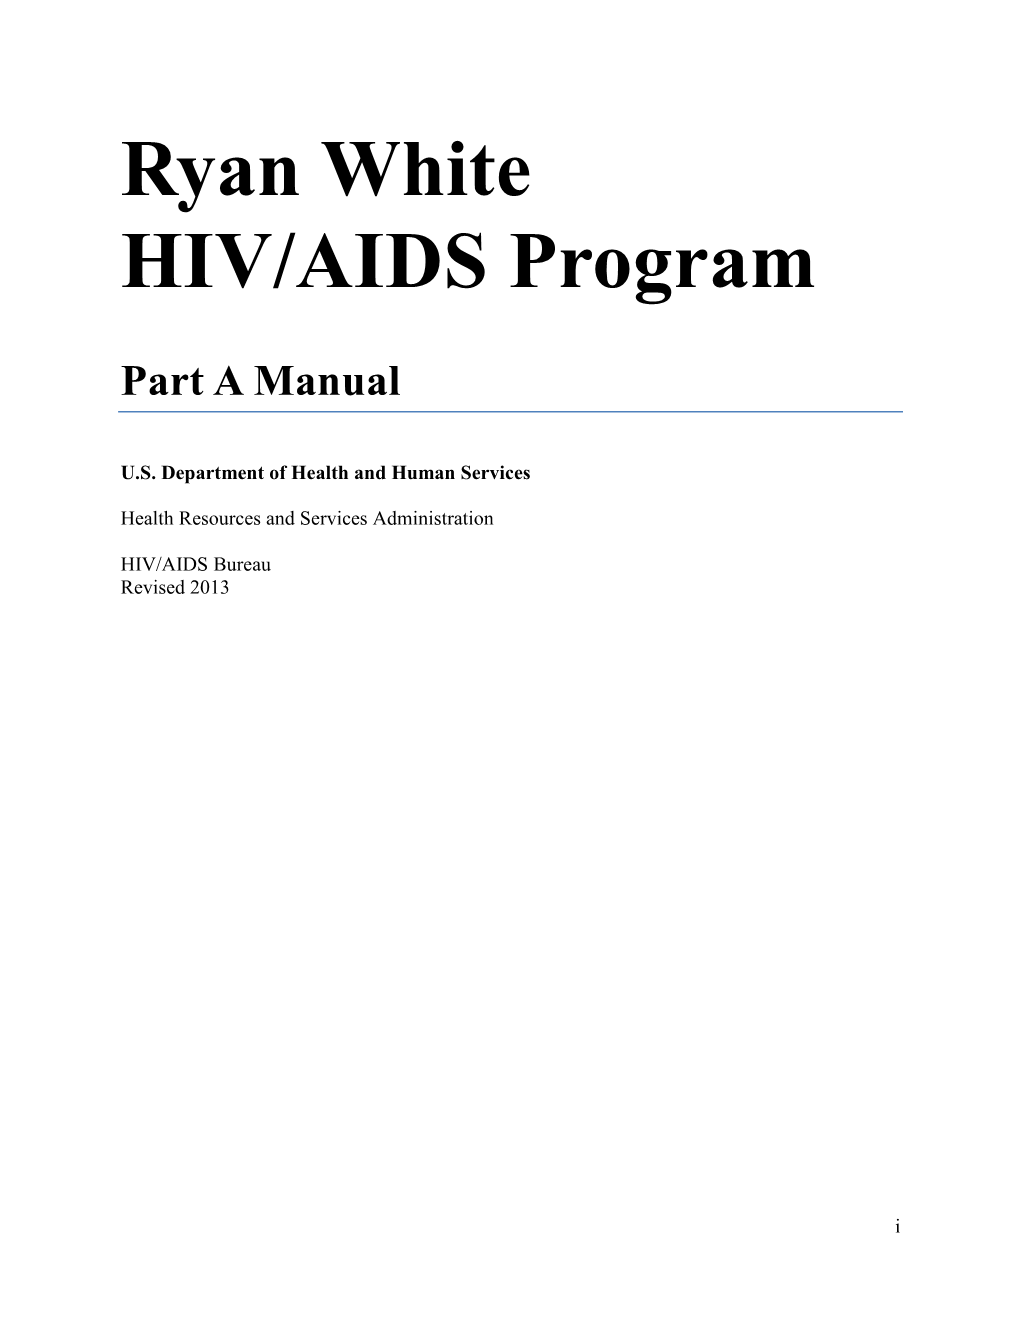 Ryan White HIV/AIDS Program Part a Manual—Revised 2013